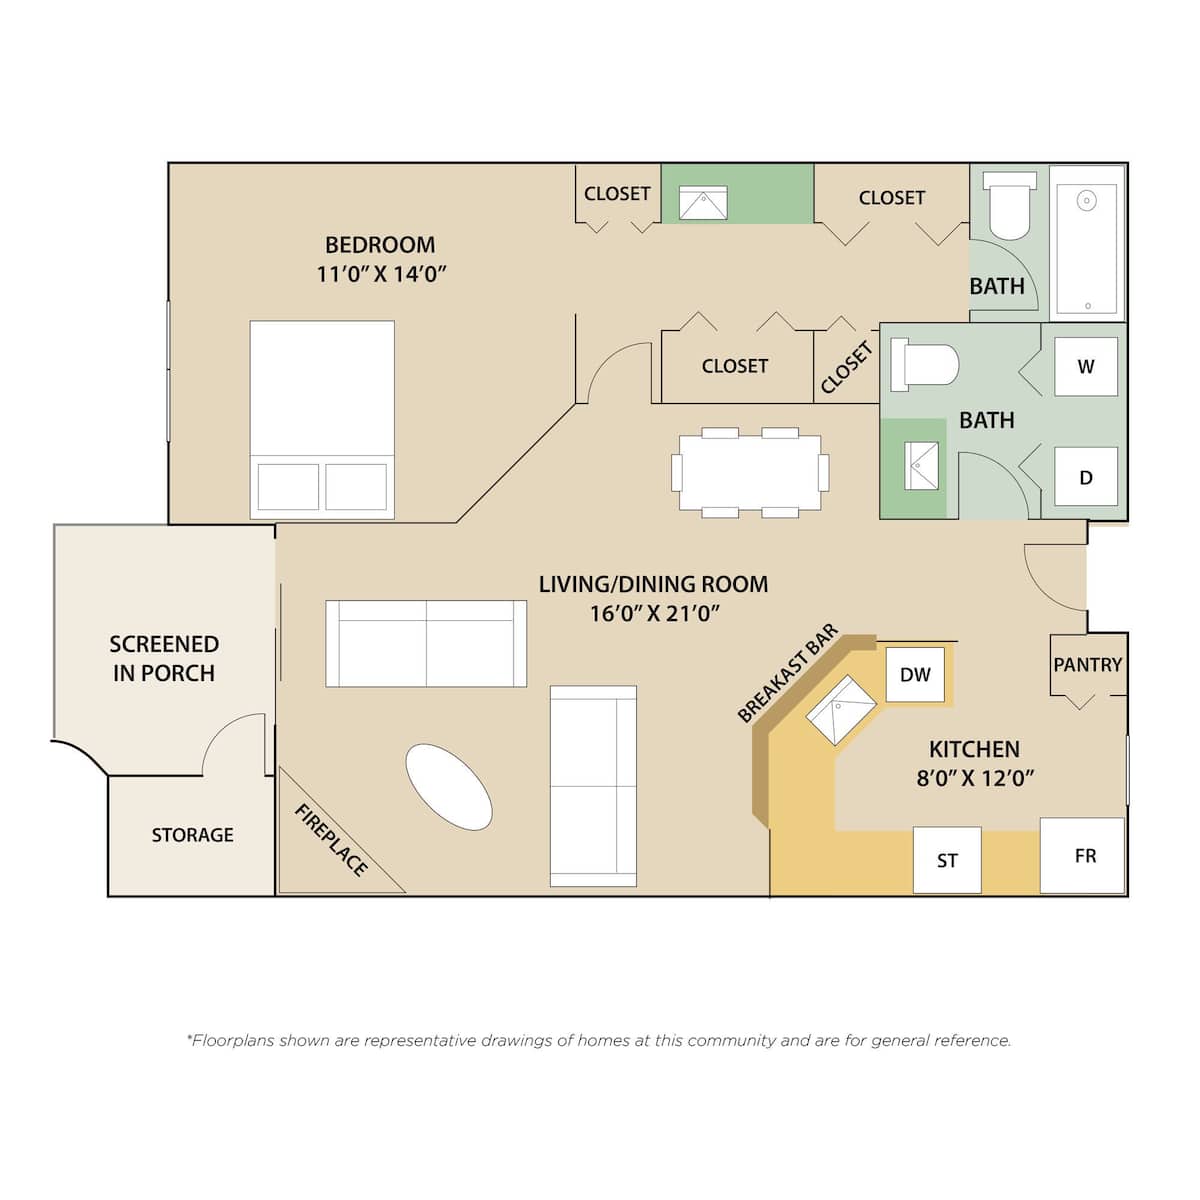 Floorplan diagram for Pinehurst Classic, showing 1 bedroom